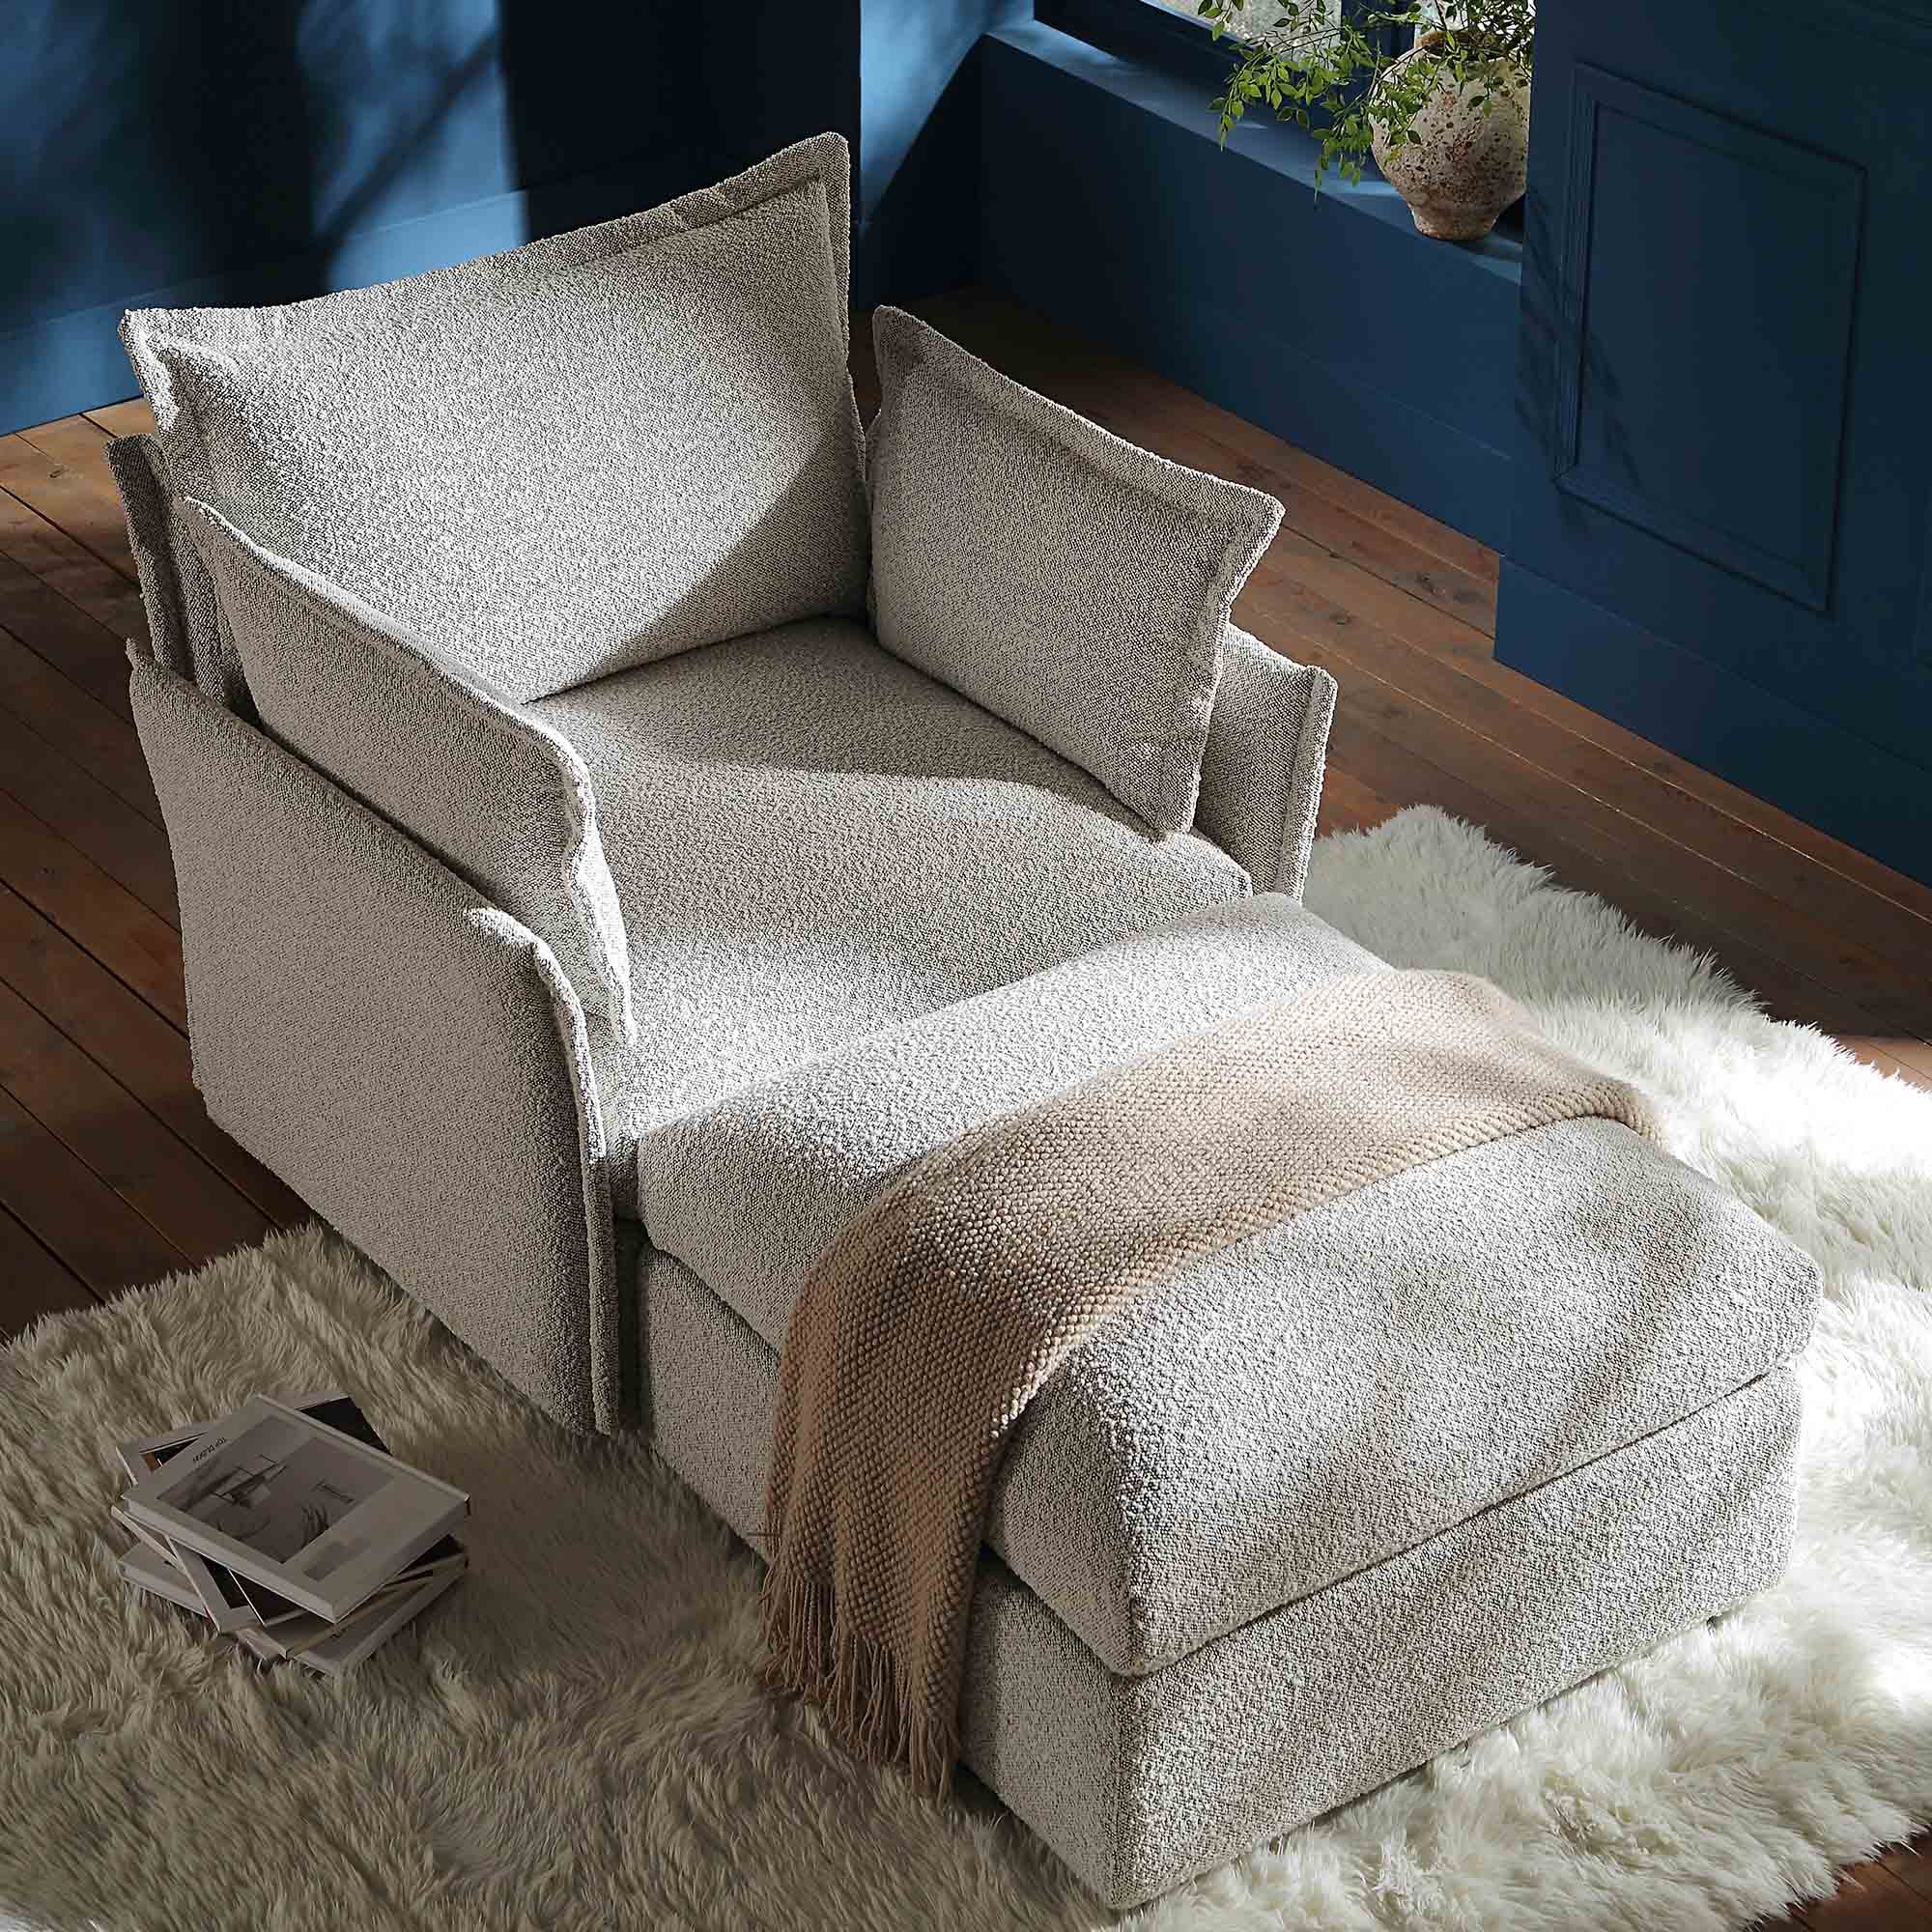 Byron Pillow Edge Mist Grey Boucle Modular Sofa, 1-Seater Chaise